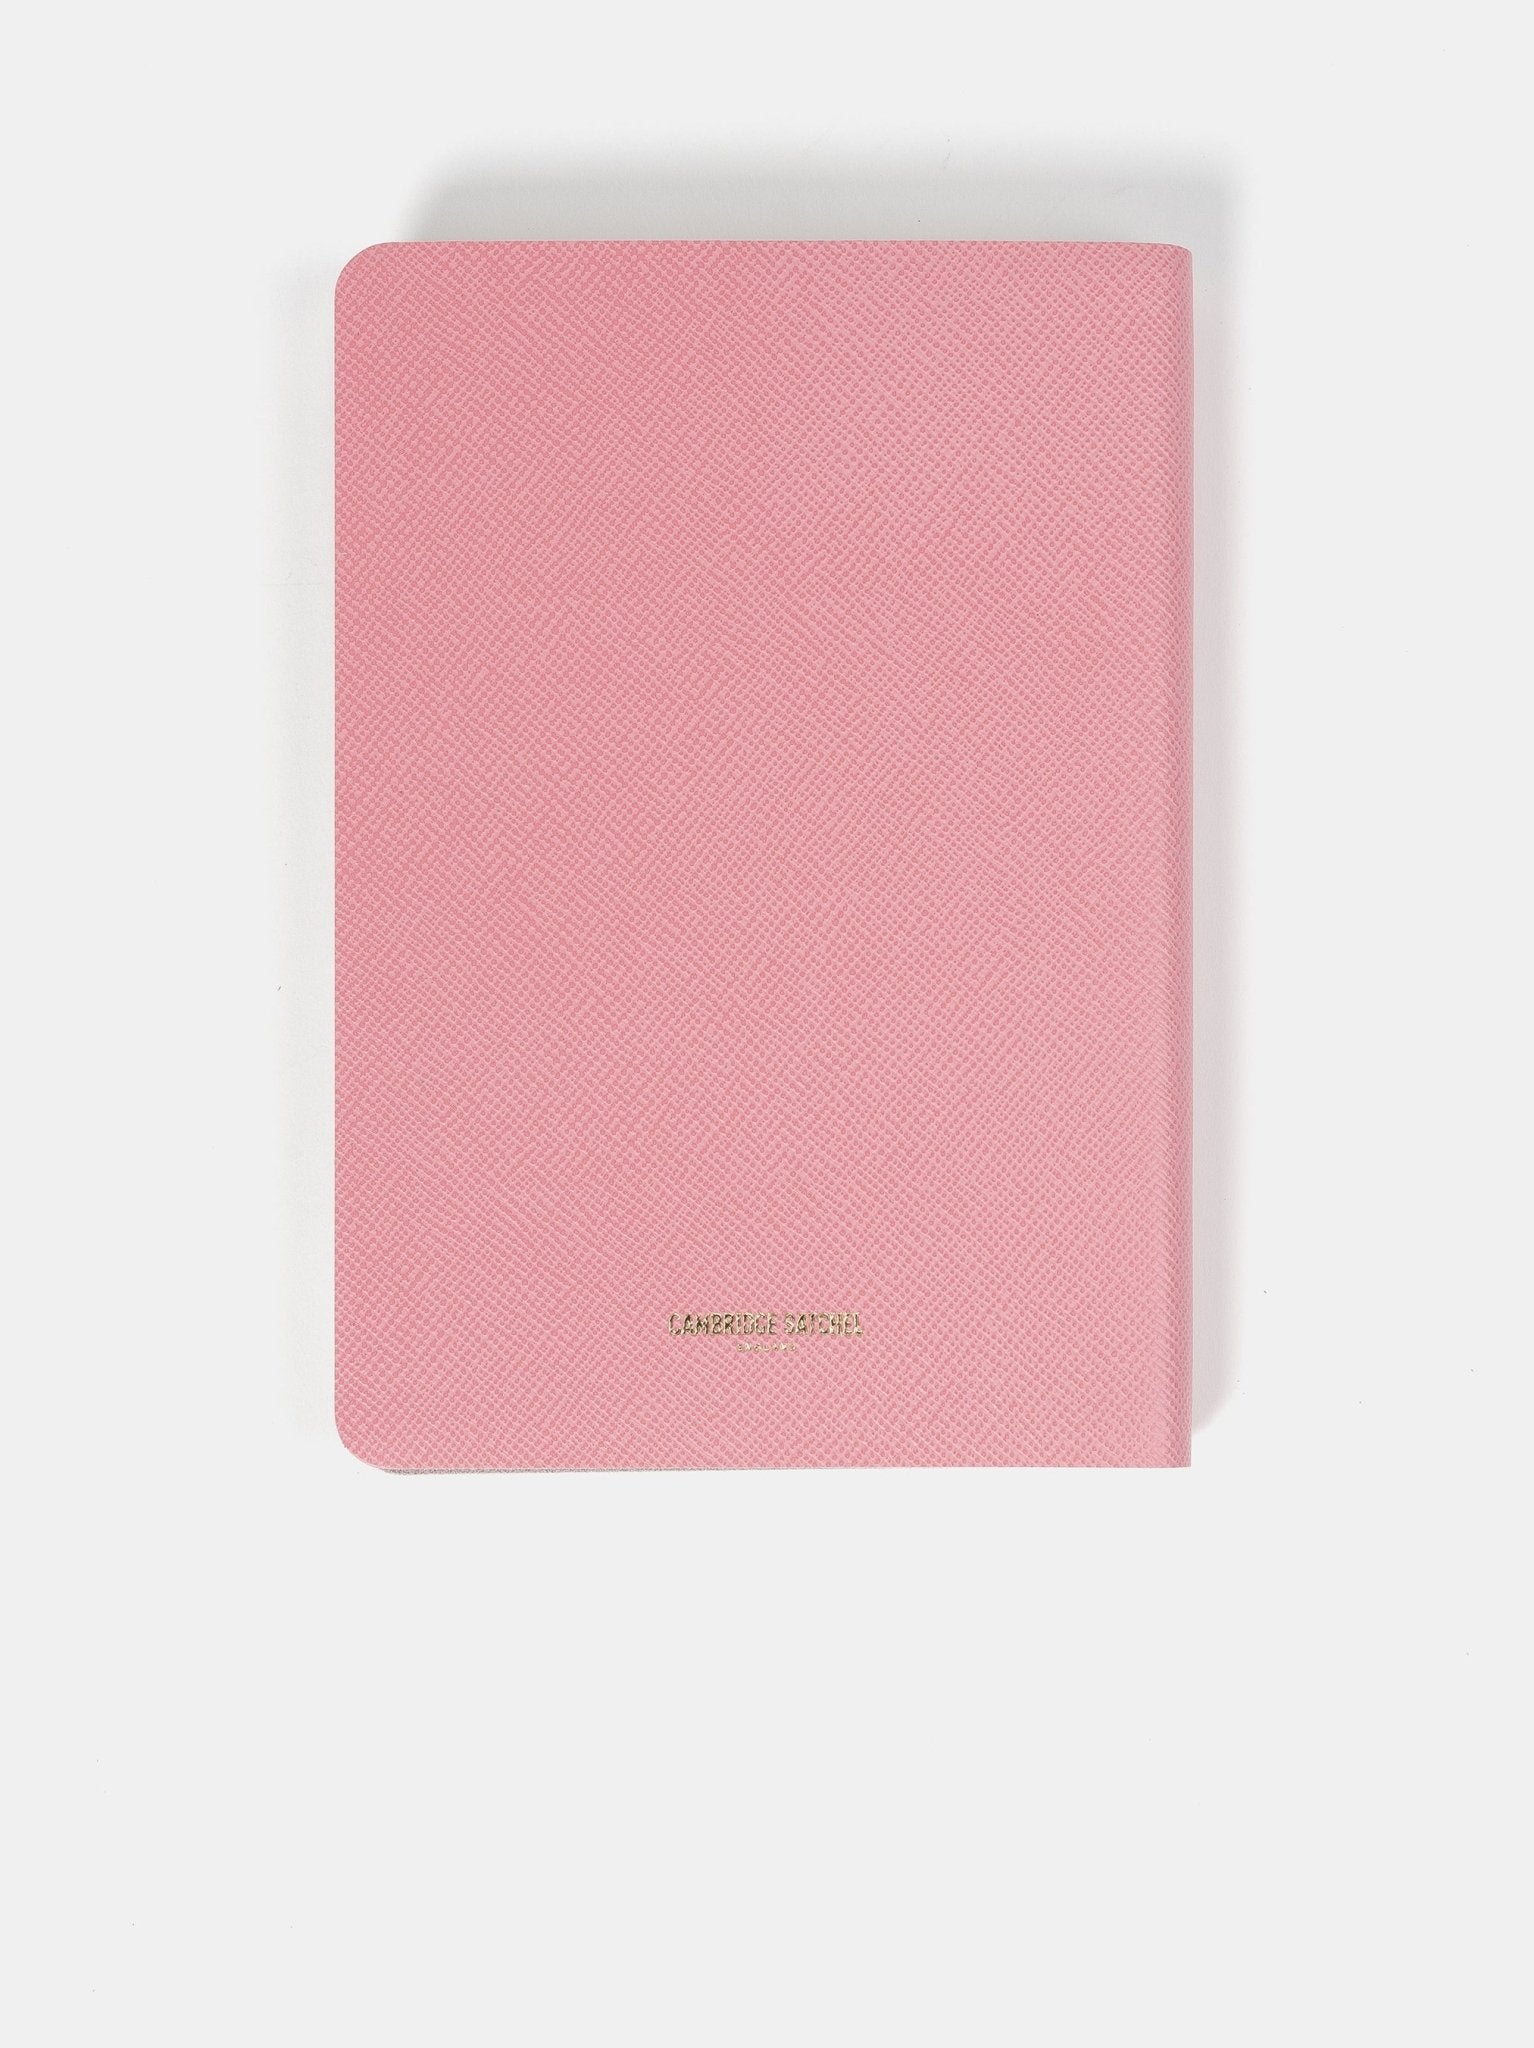 The A5 Notebook - Salmon Pink Saffiano - Cambridge Satchel